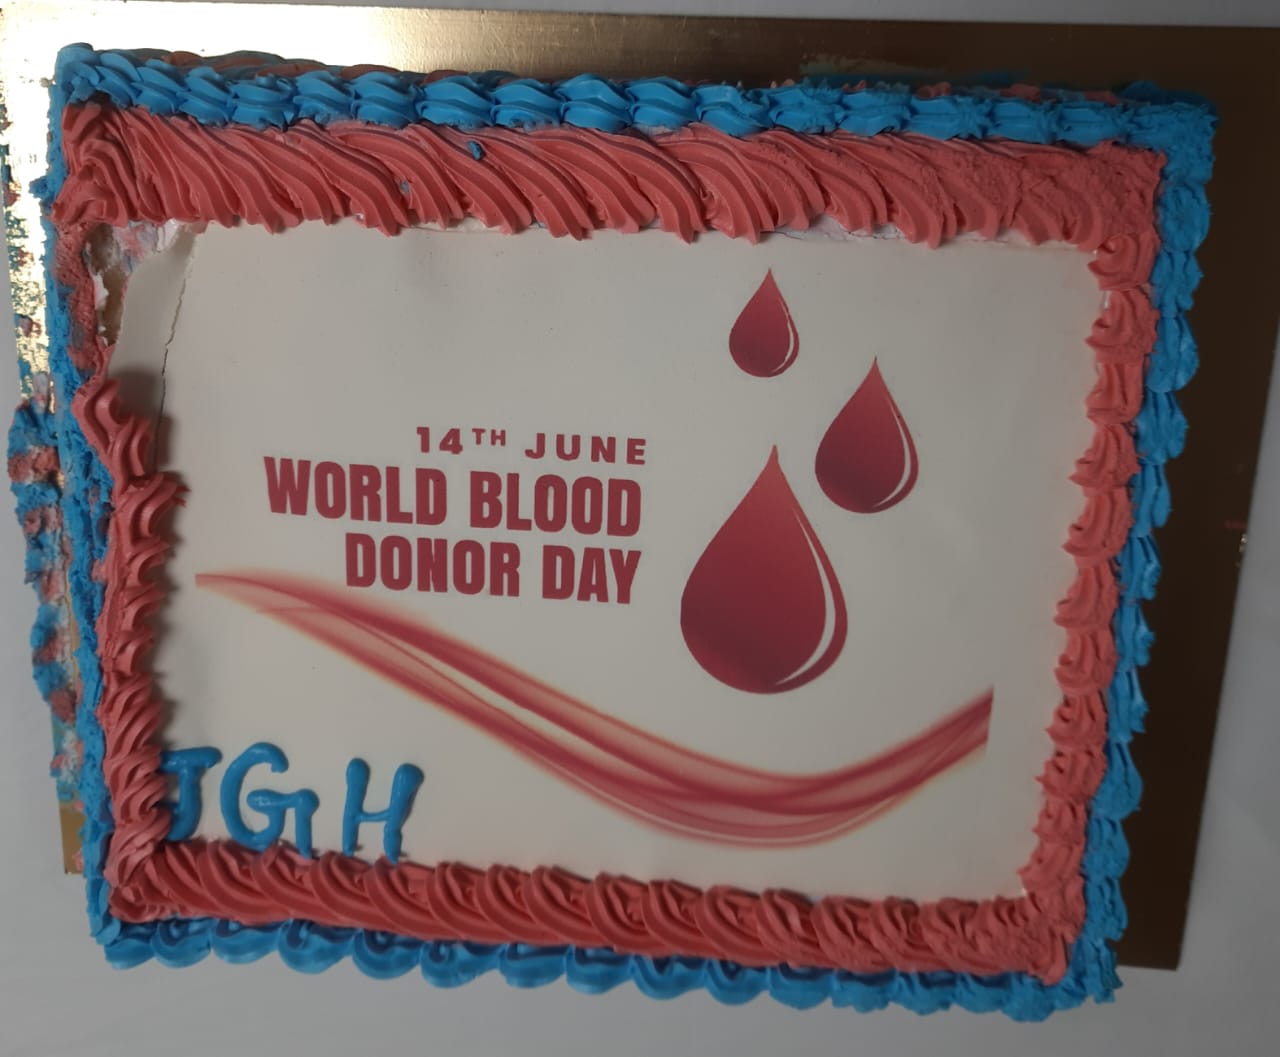 World blood donor day celebration at JGH